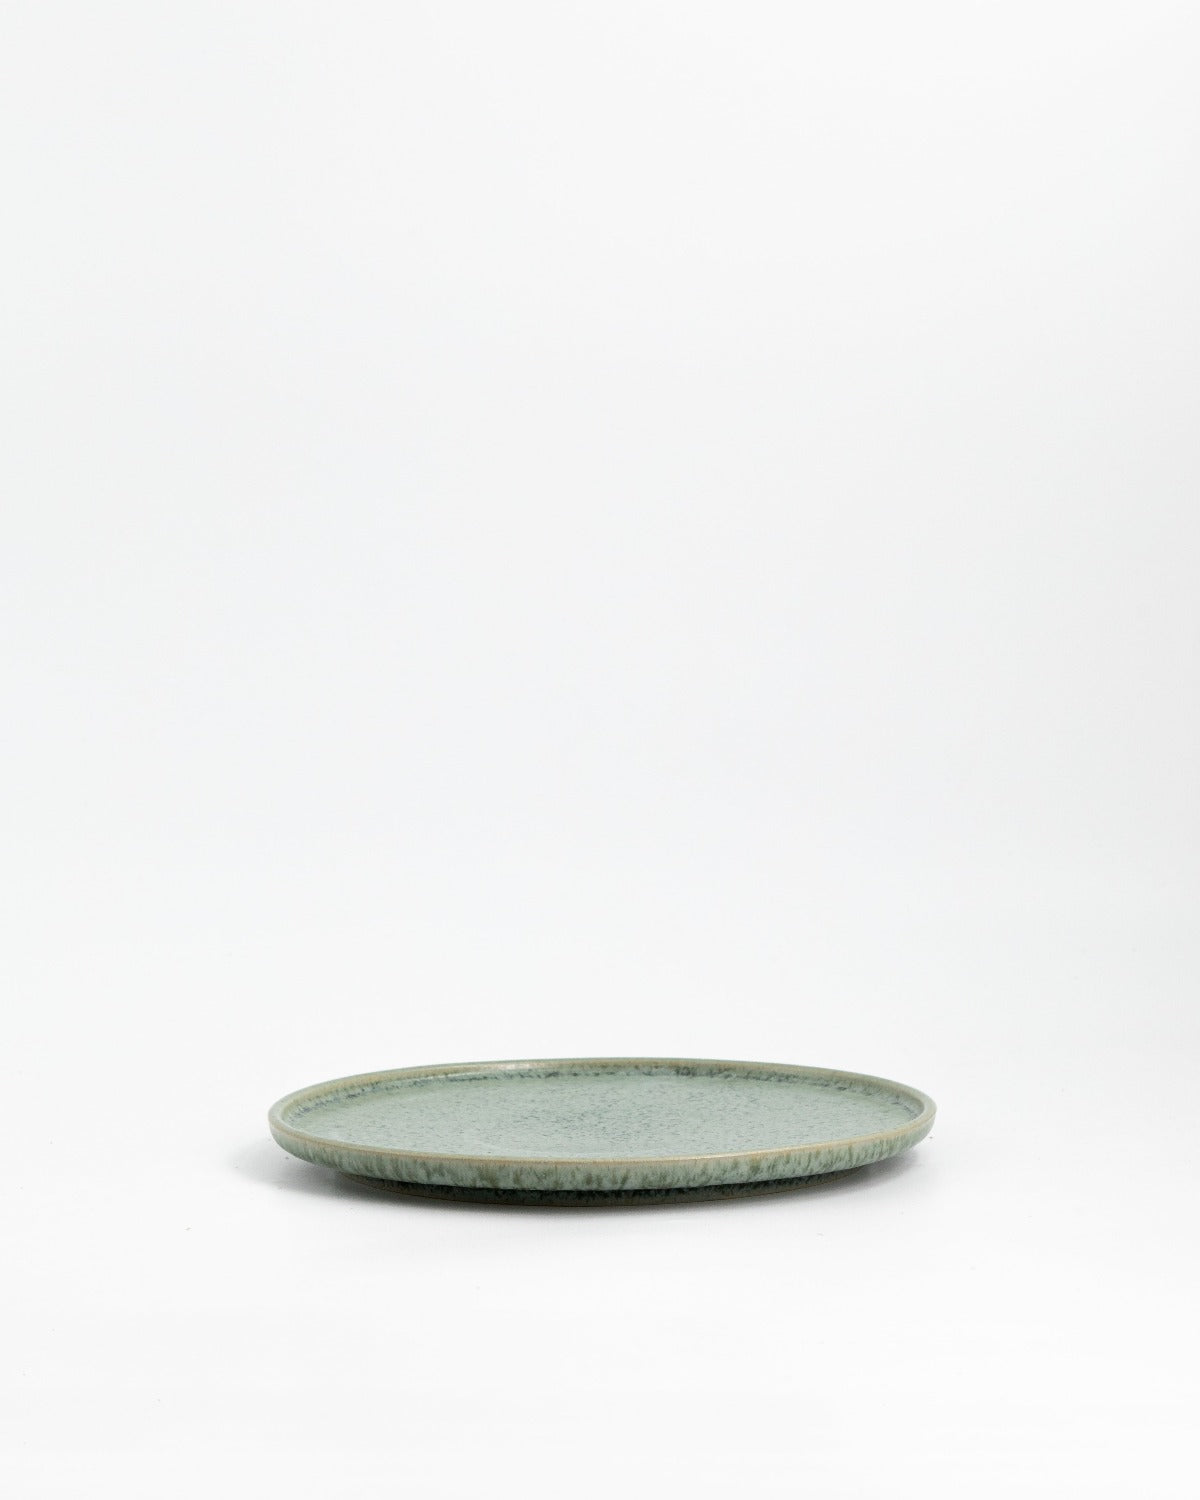 Farrago Plate Green Wrack/22cm 